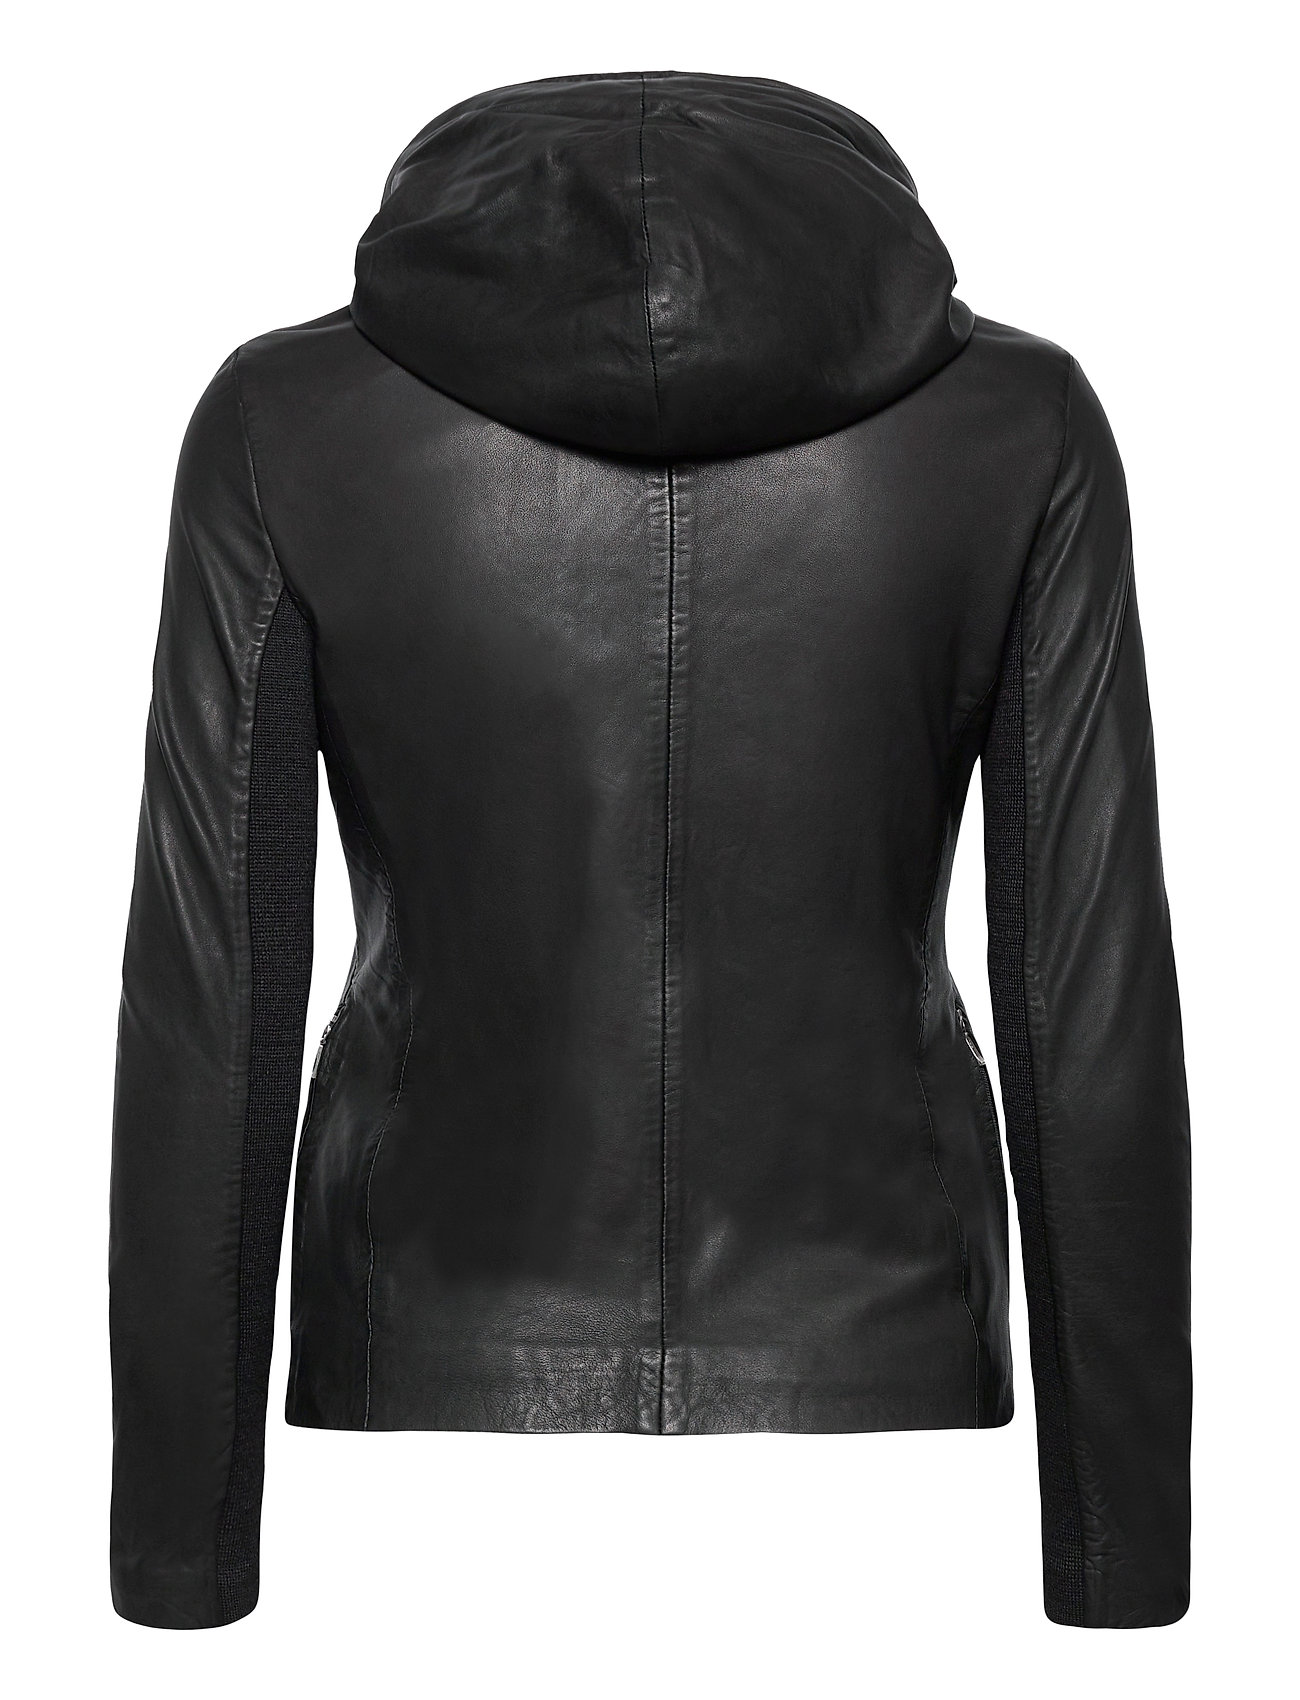 MDK / Munderingskompagniet læderjakker – Stine Hood Leather Jacket Sort MDK / Munderingskompagniet til dame i Sort - Pashion.dk